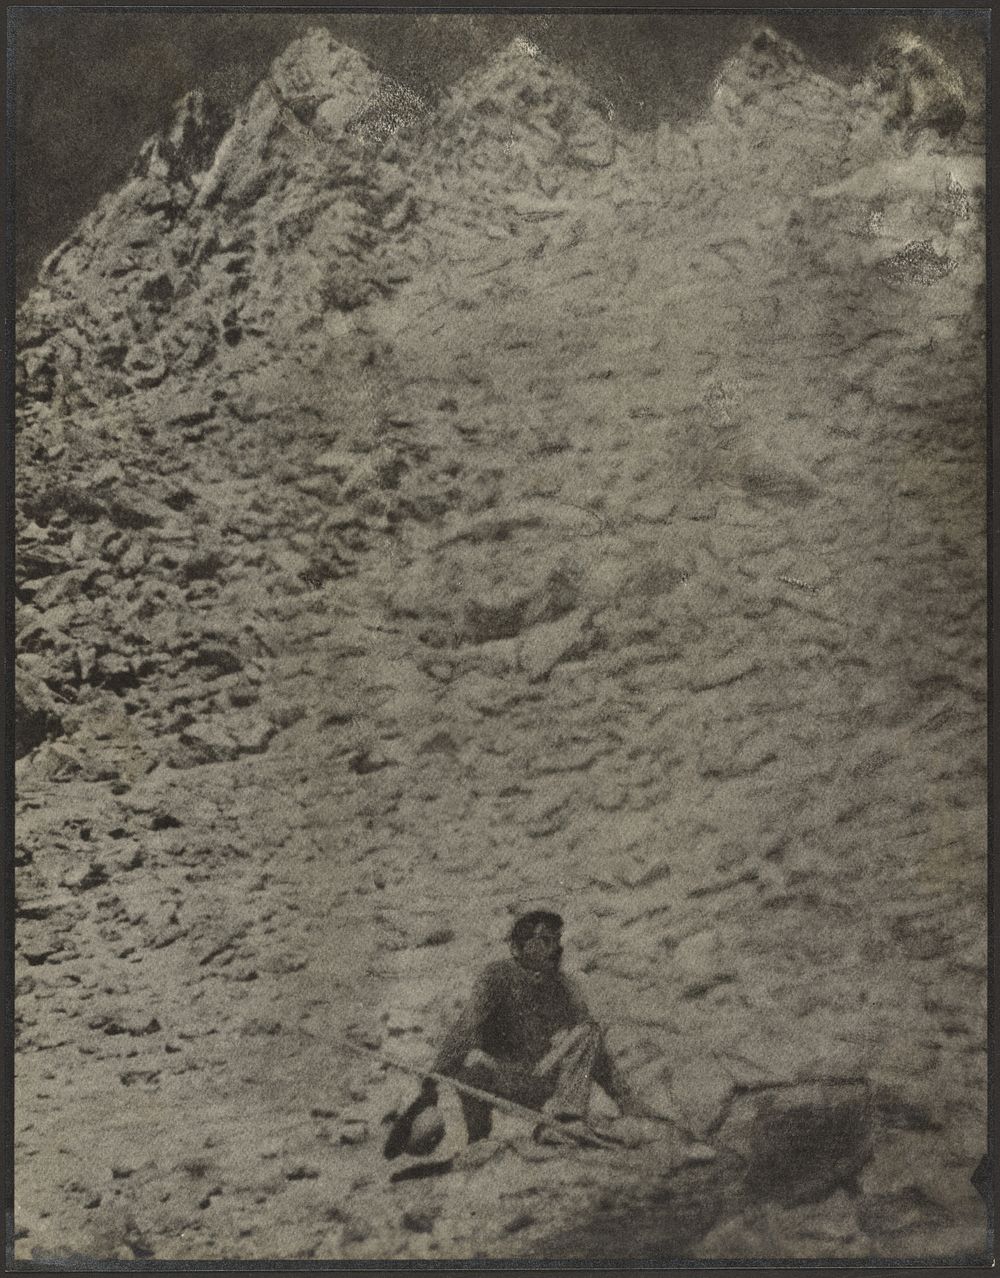 Man Crouching in Rocky Landscape by Louis Fleckenstein